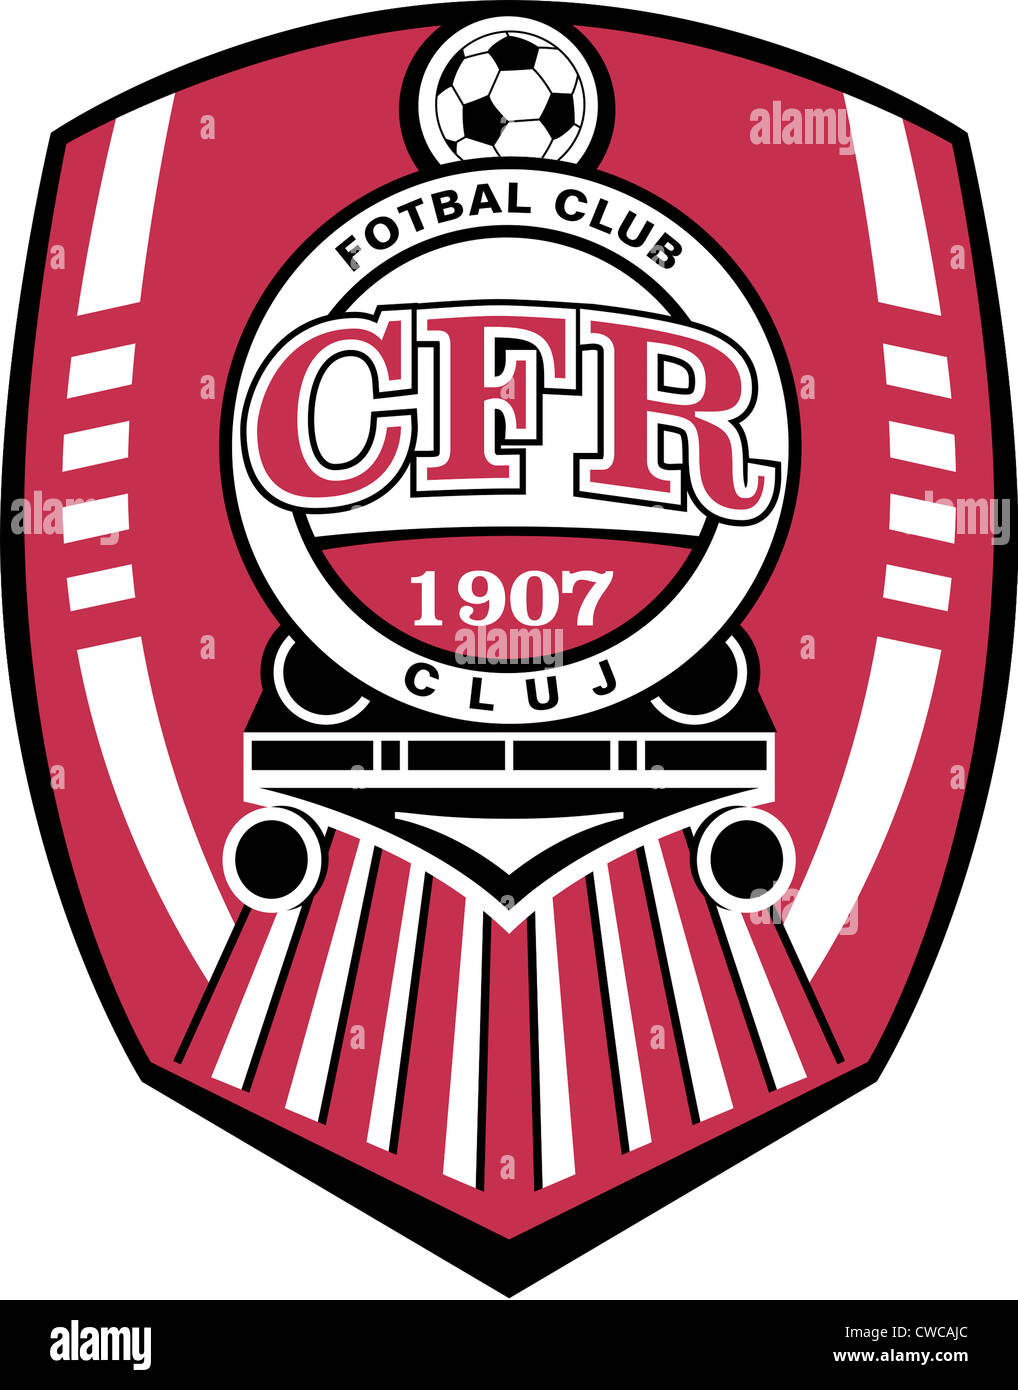 Logo of Romanian football club CFR Cluj. Stock Photo